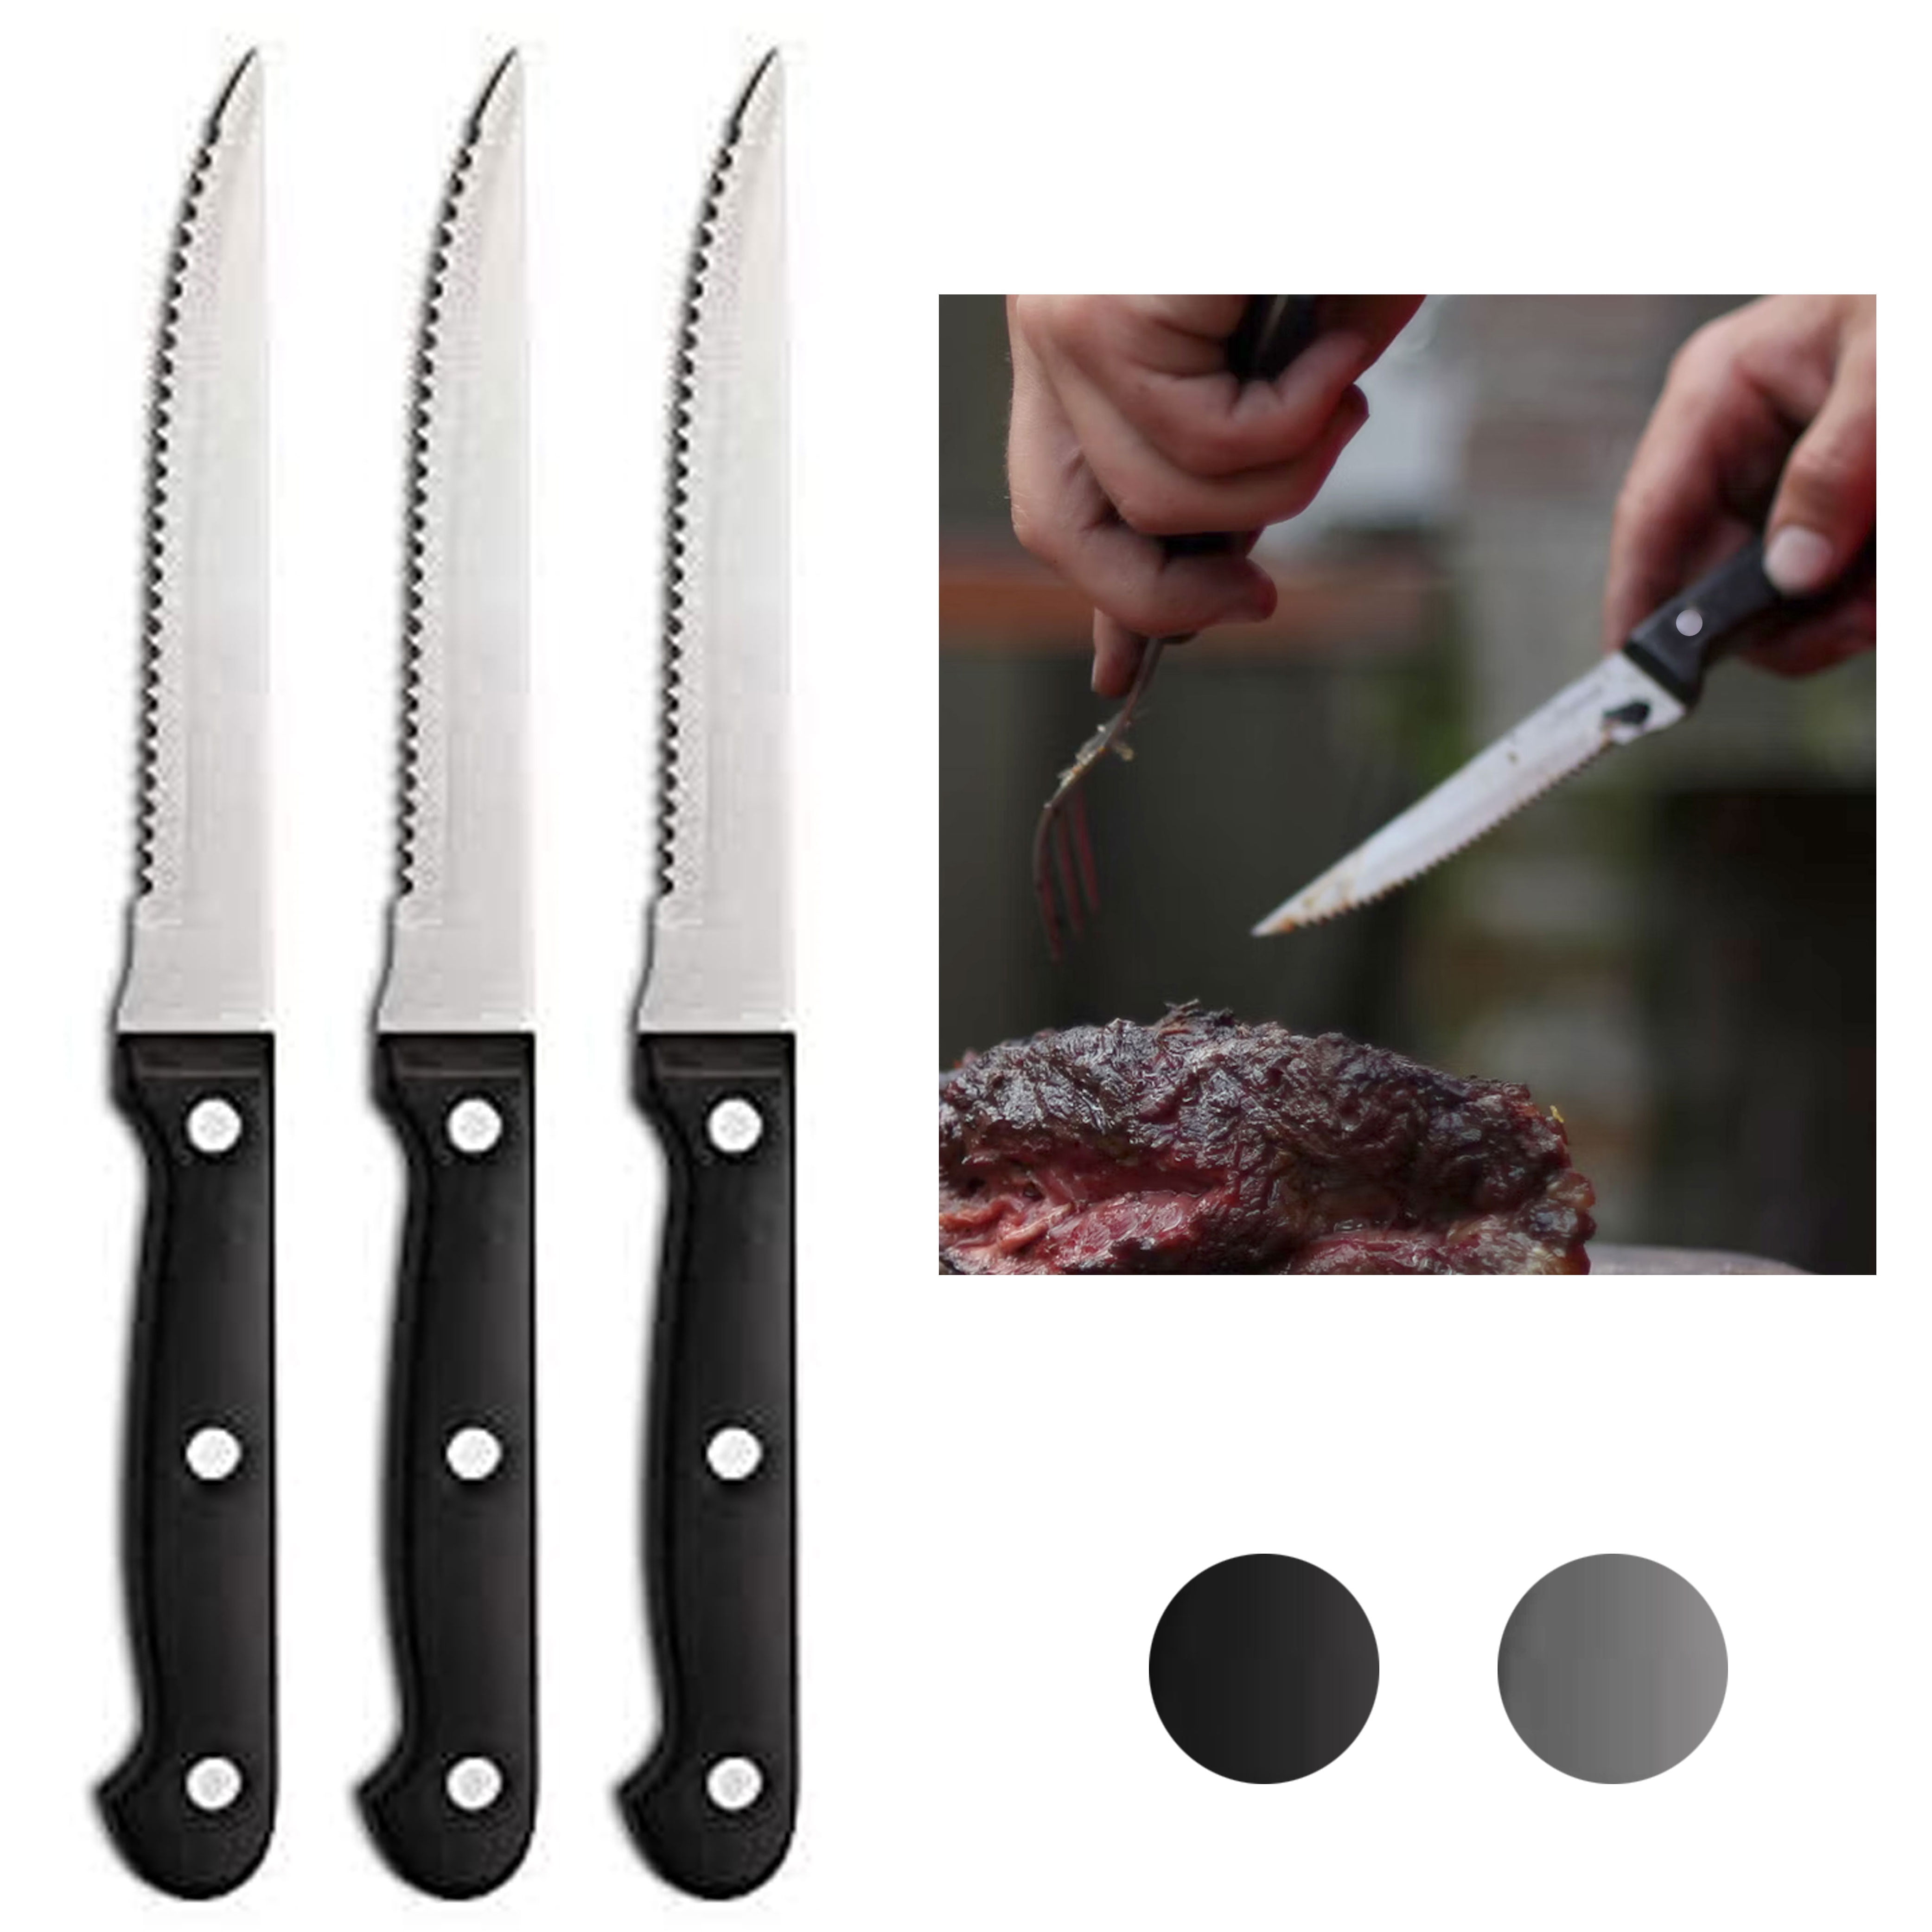 Deik Knife Set, German Stainless Steel Knife Block Set Forged Triple Rivet Cutlery Block Set, Black